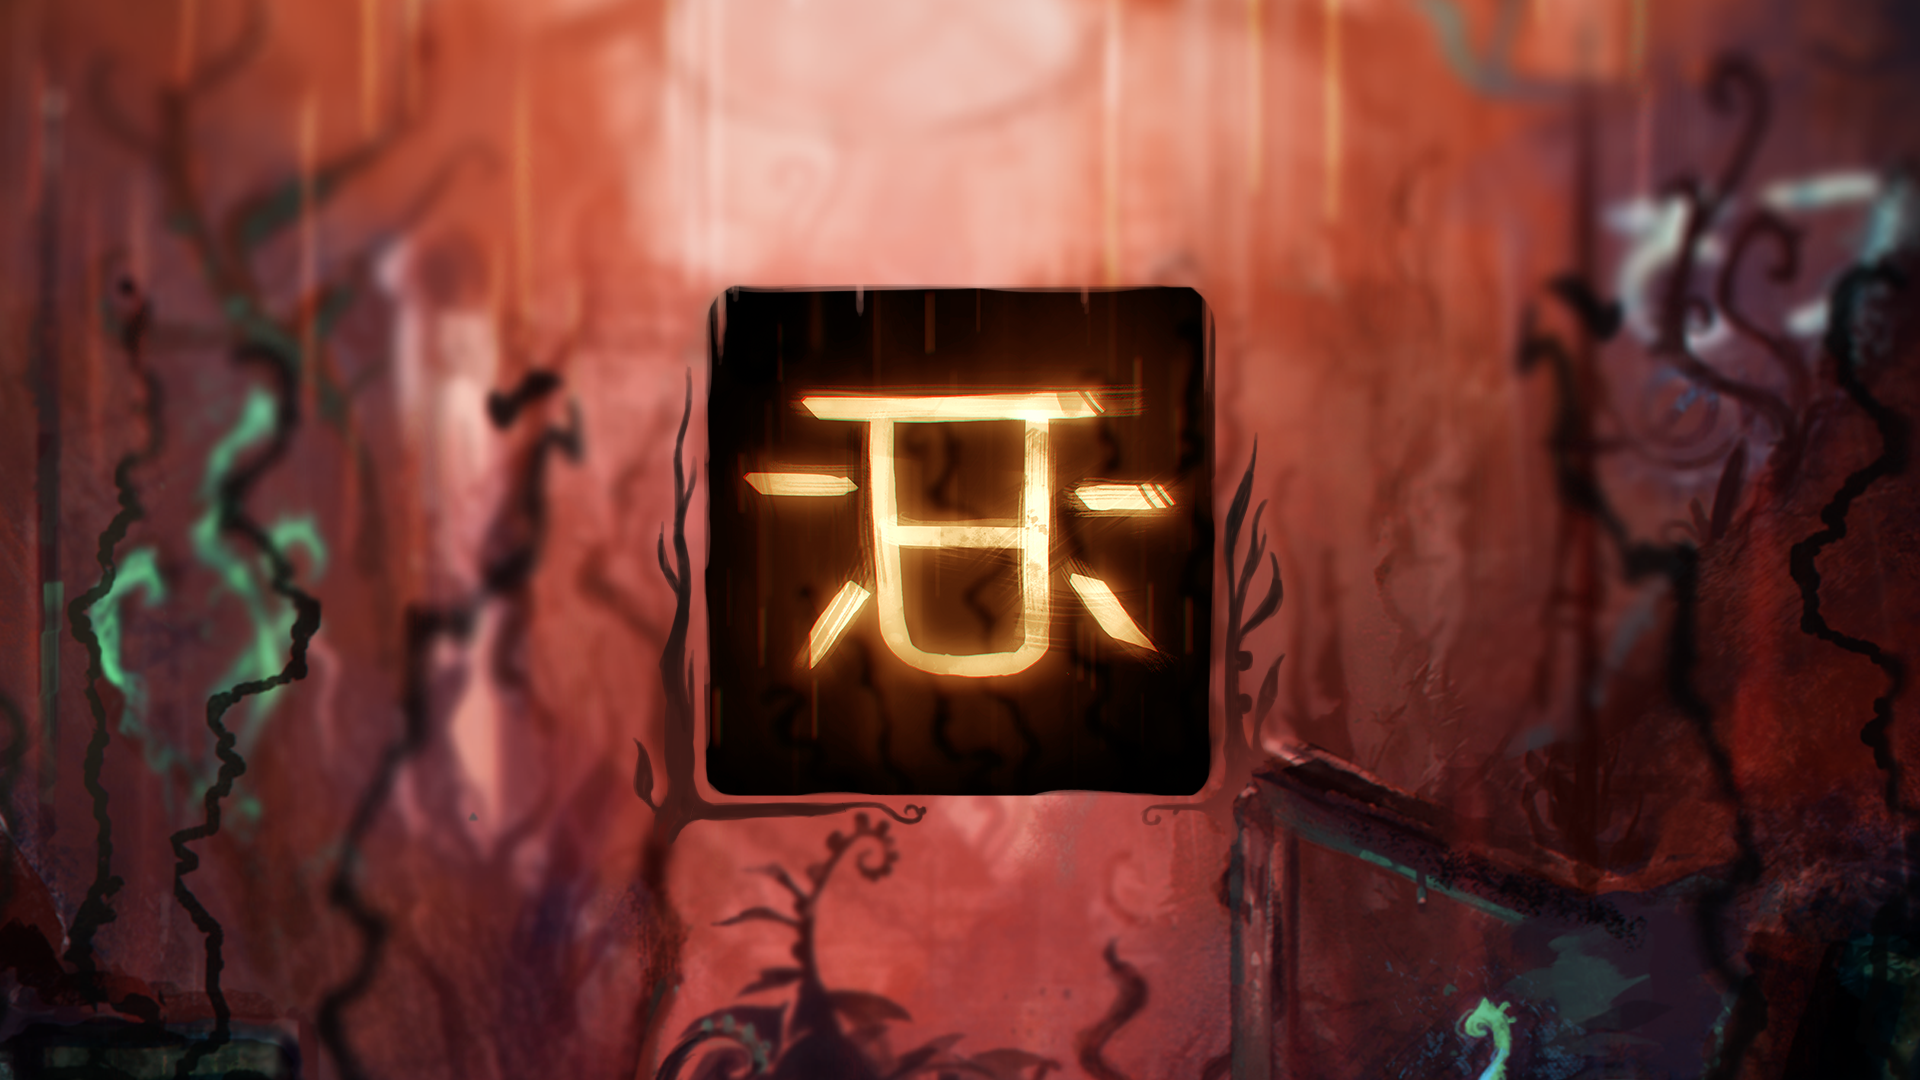 Icon for The Dragon Slayer